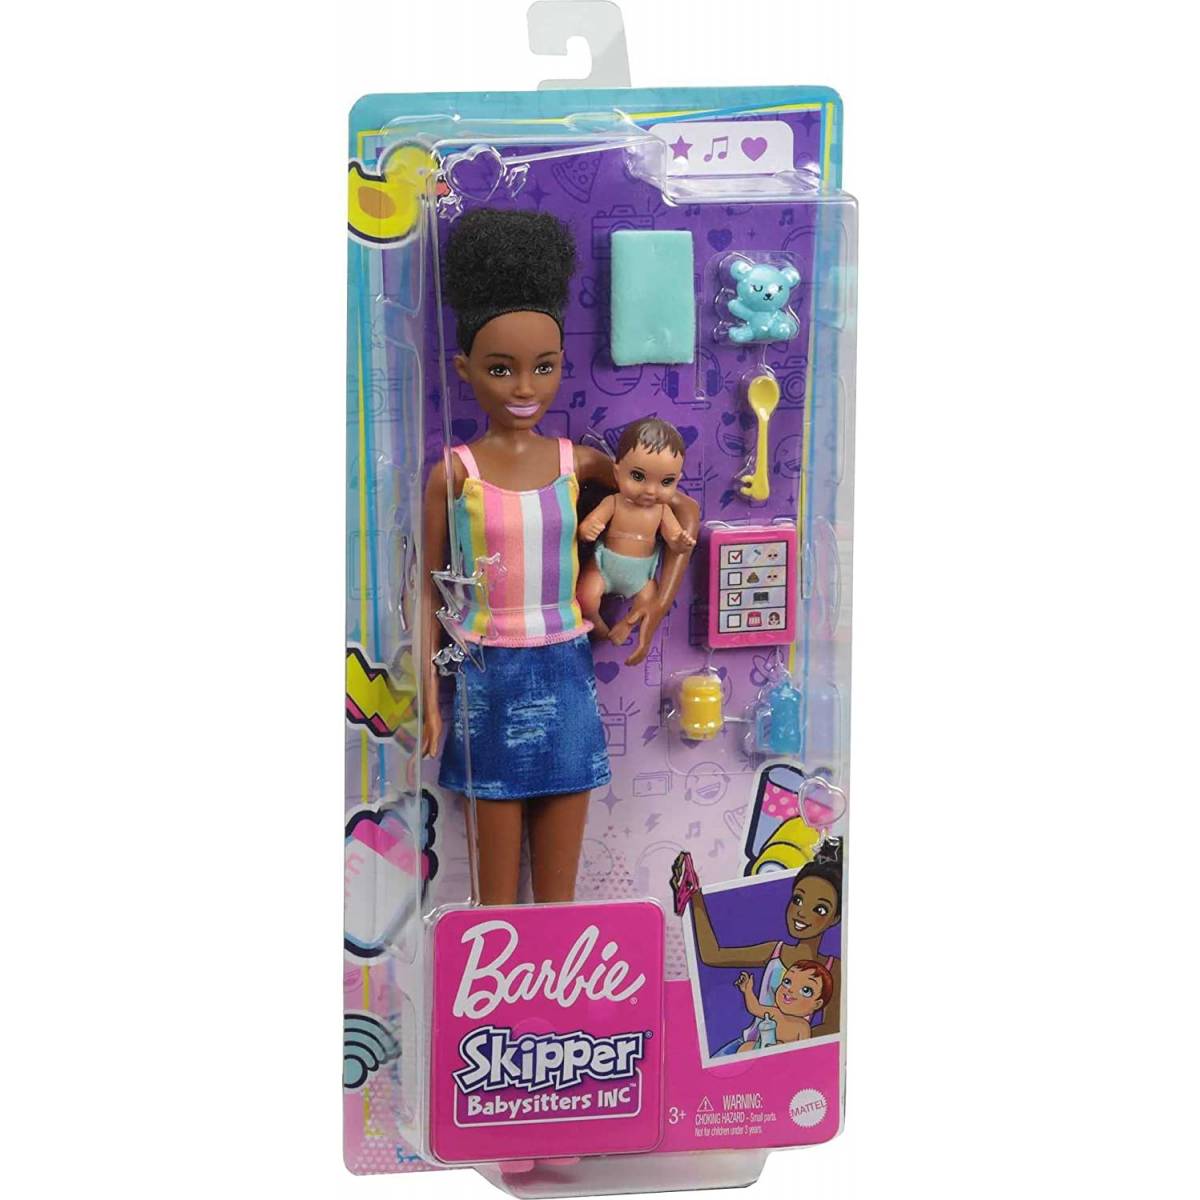 Afro Skipper Babysitters Barbie Doll